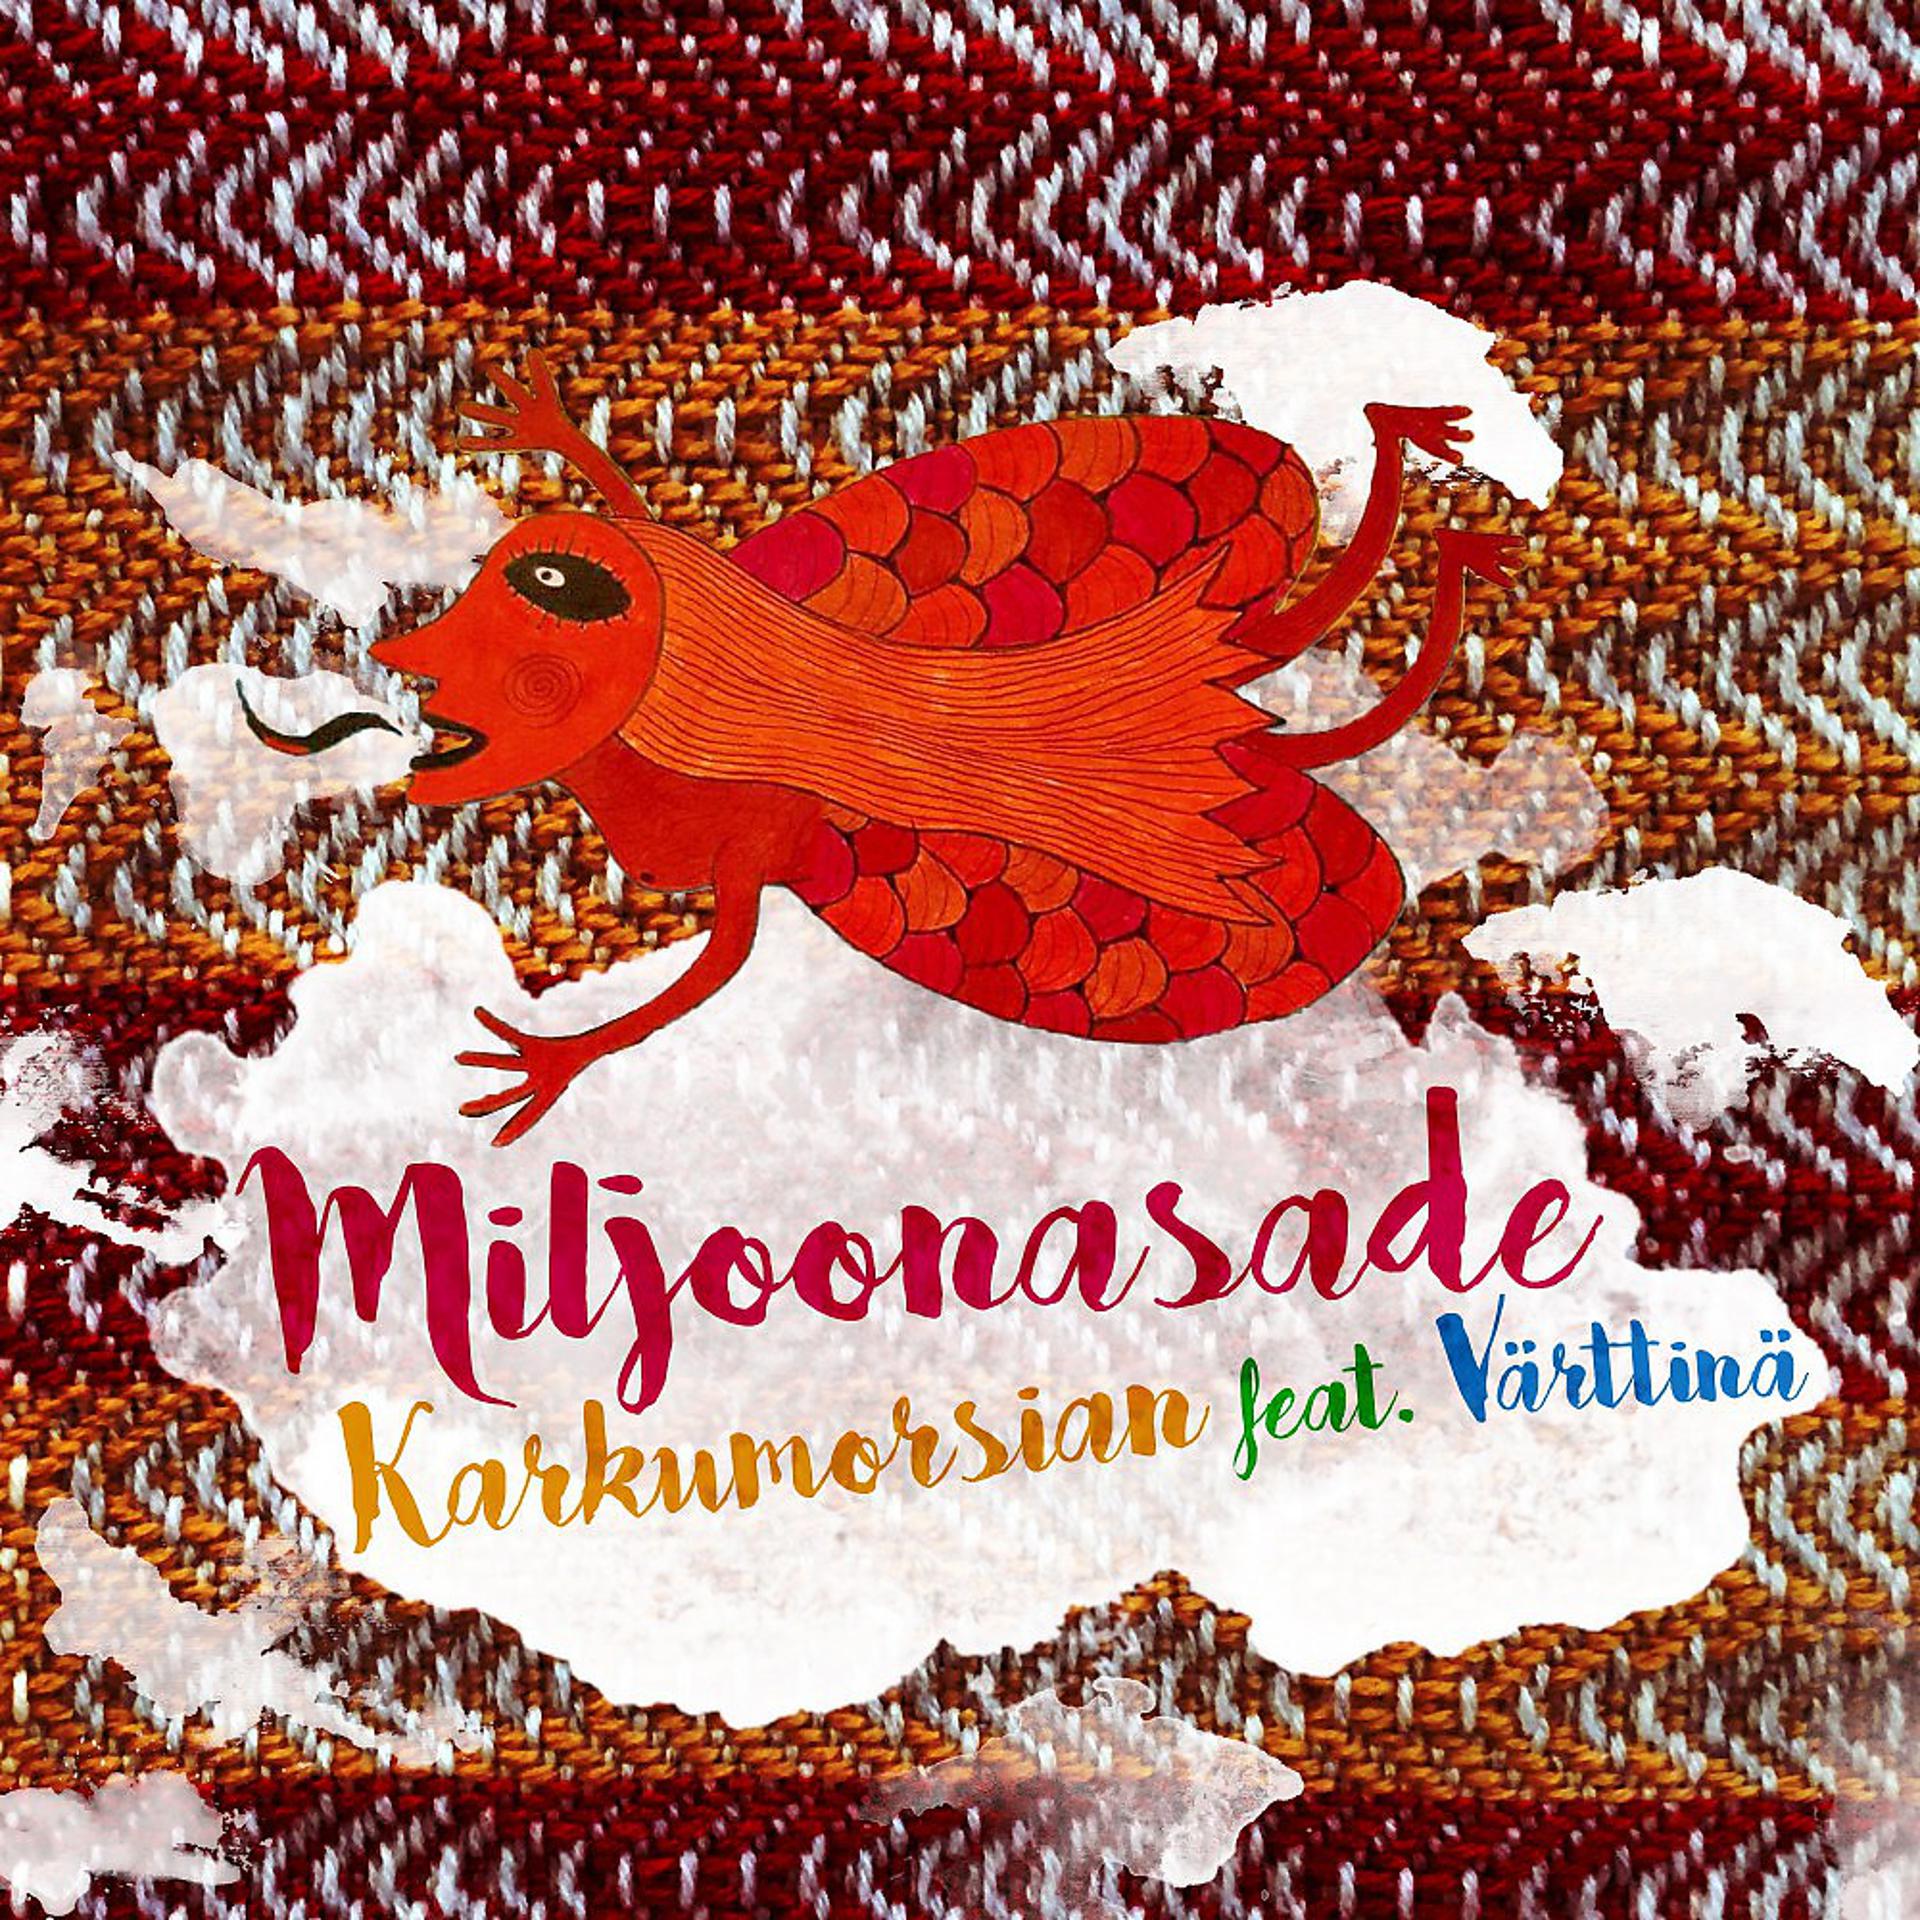 Постер альбома Karkumorsian